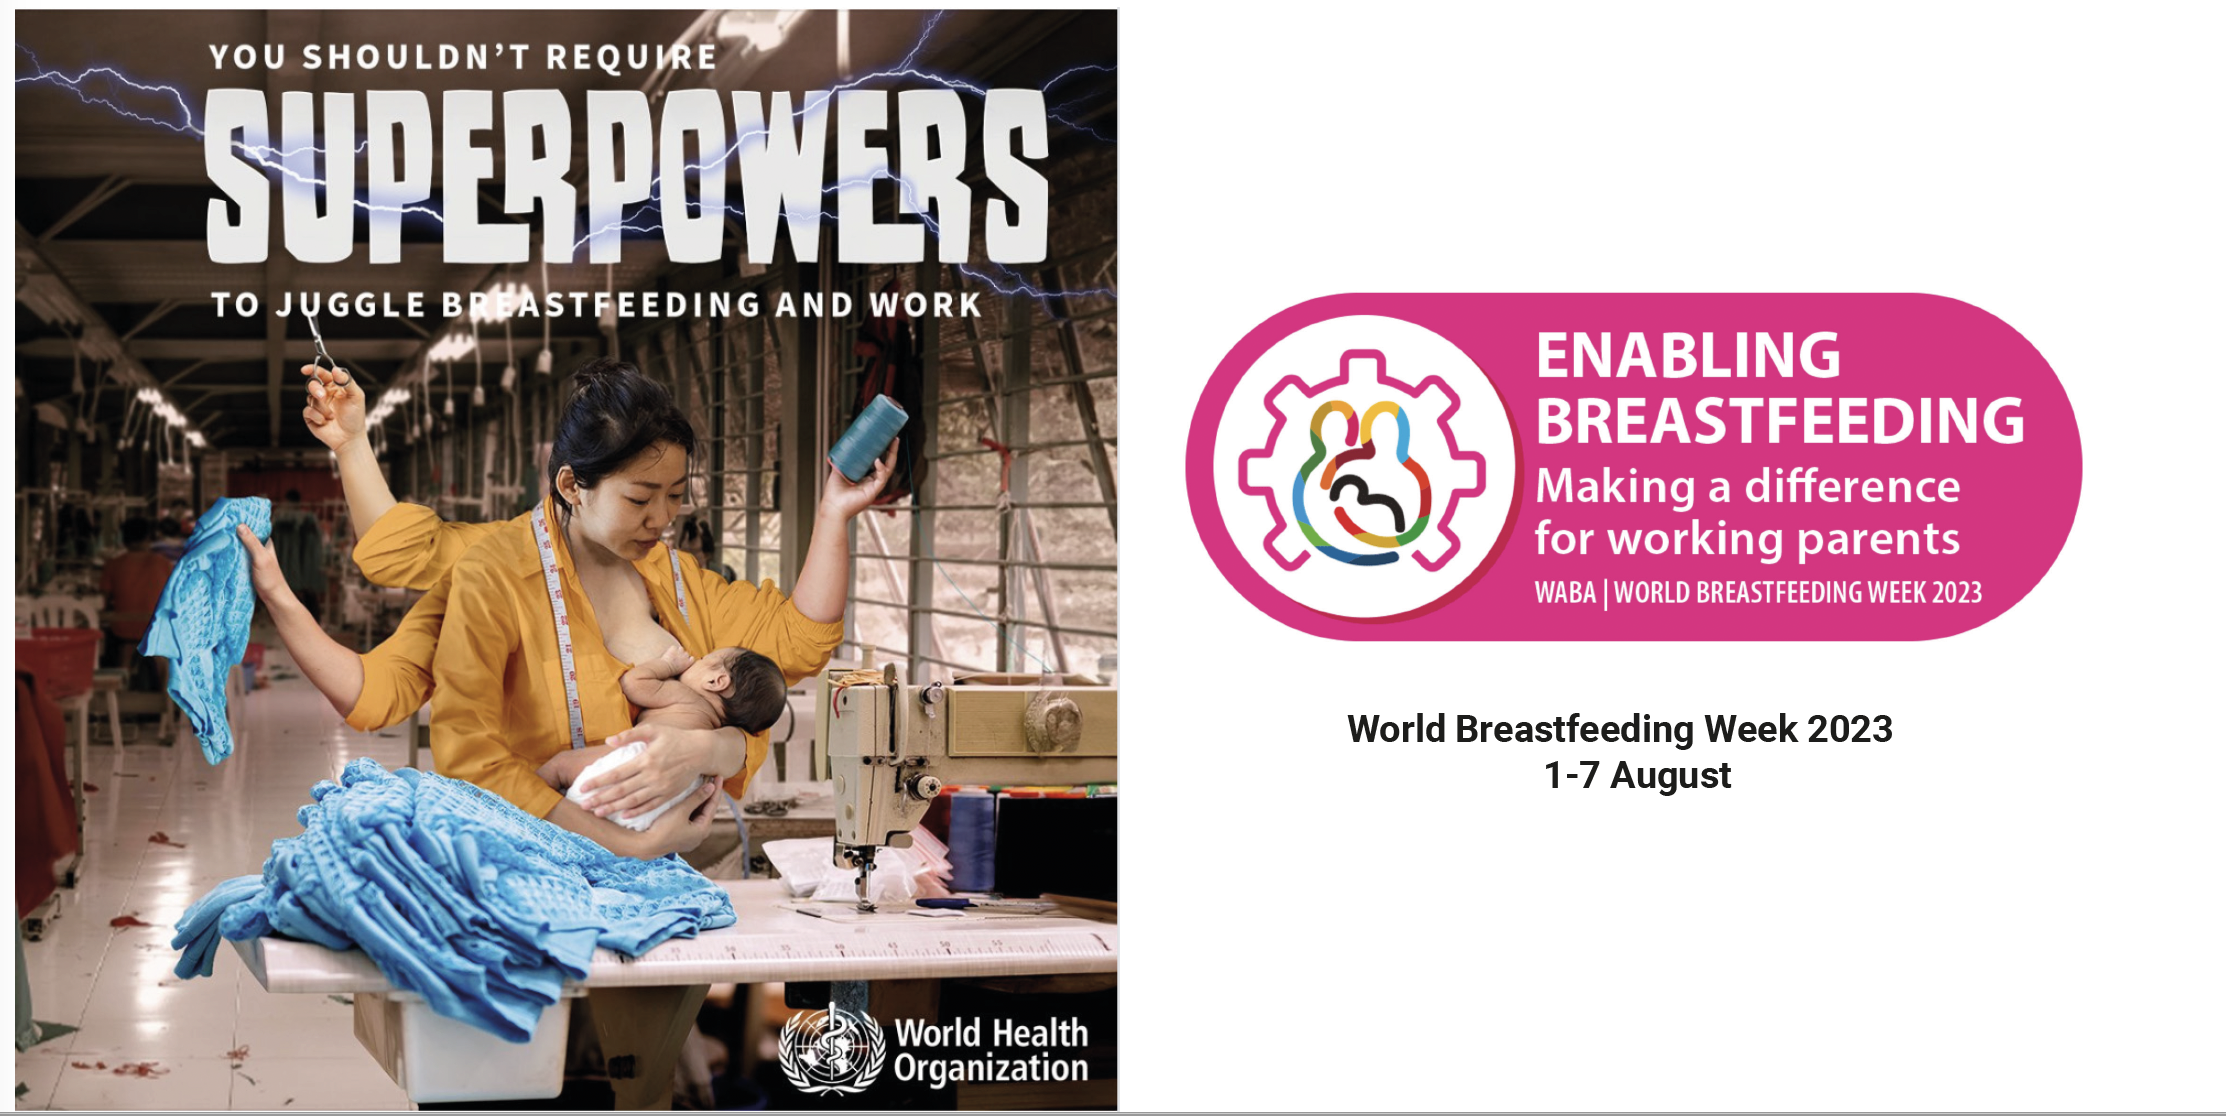 World Breastfeeding Week 2023 - breastfeeding and work